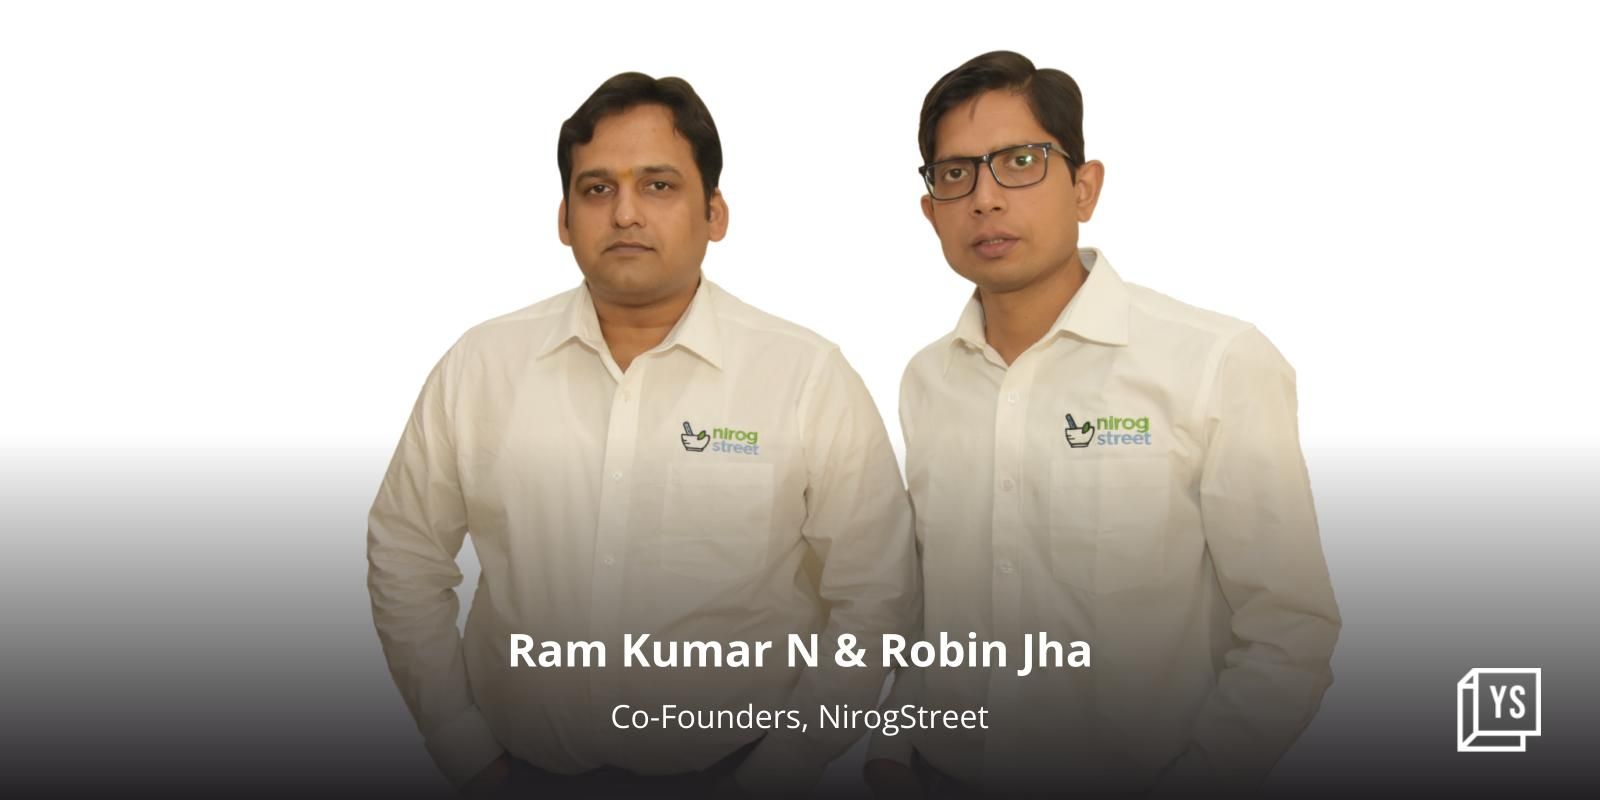 Ayurveda startup NirogStreet raises $12M in Series B round led by Jungle Ventures